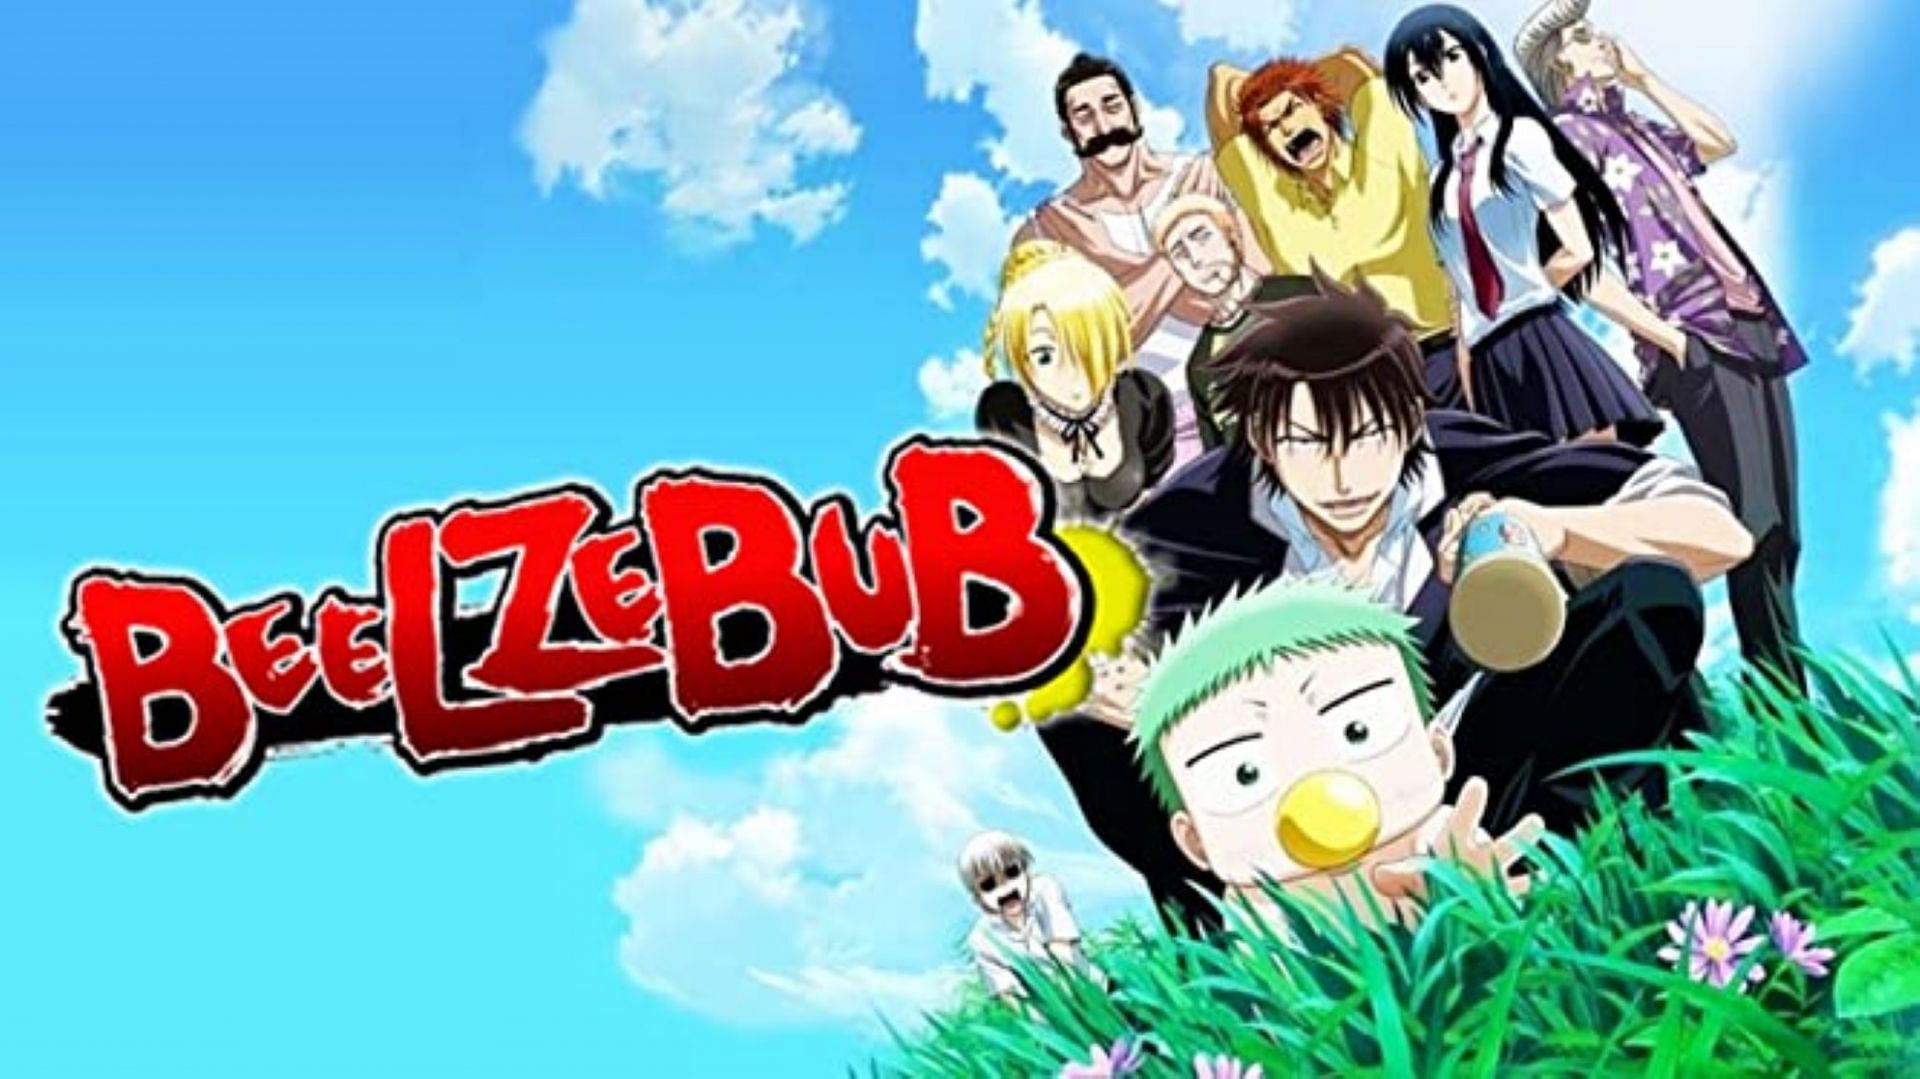 Beelzebub anime promotional poster (Image via Studio Pierrot)